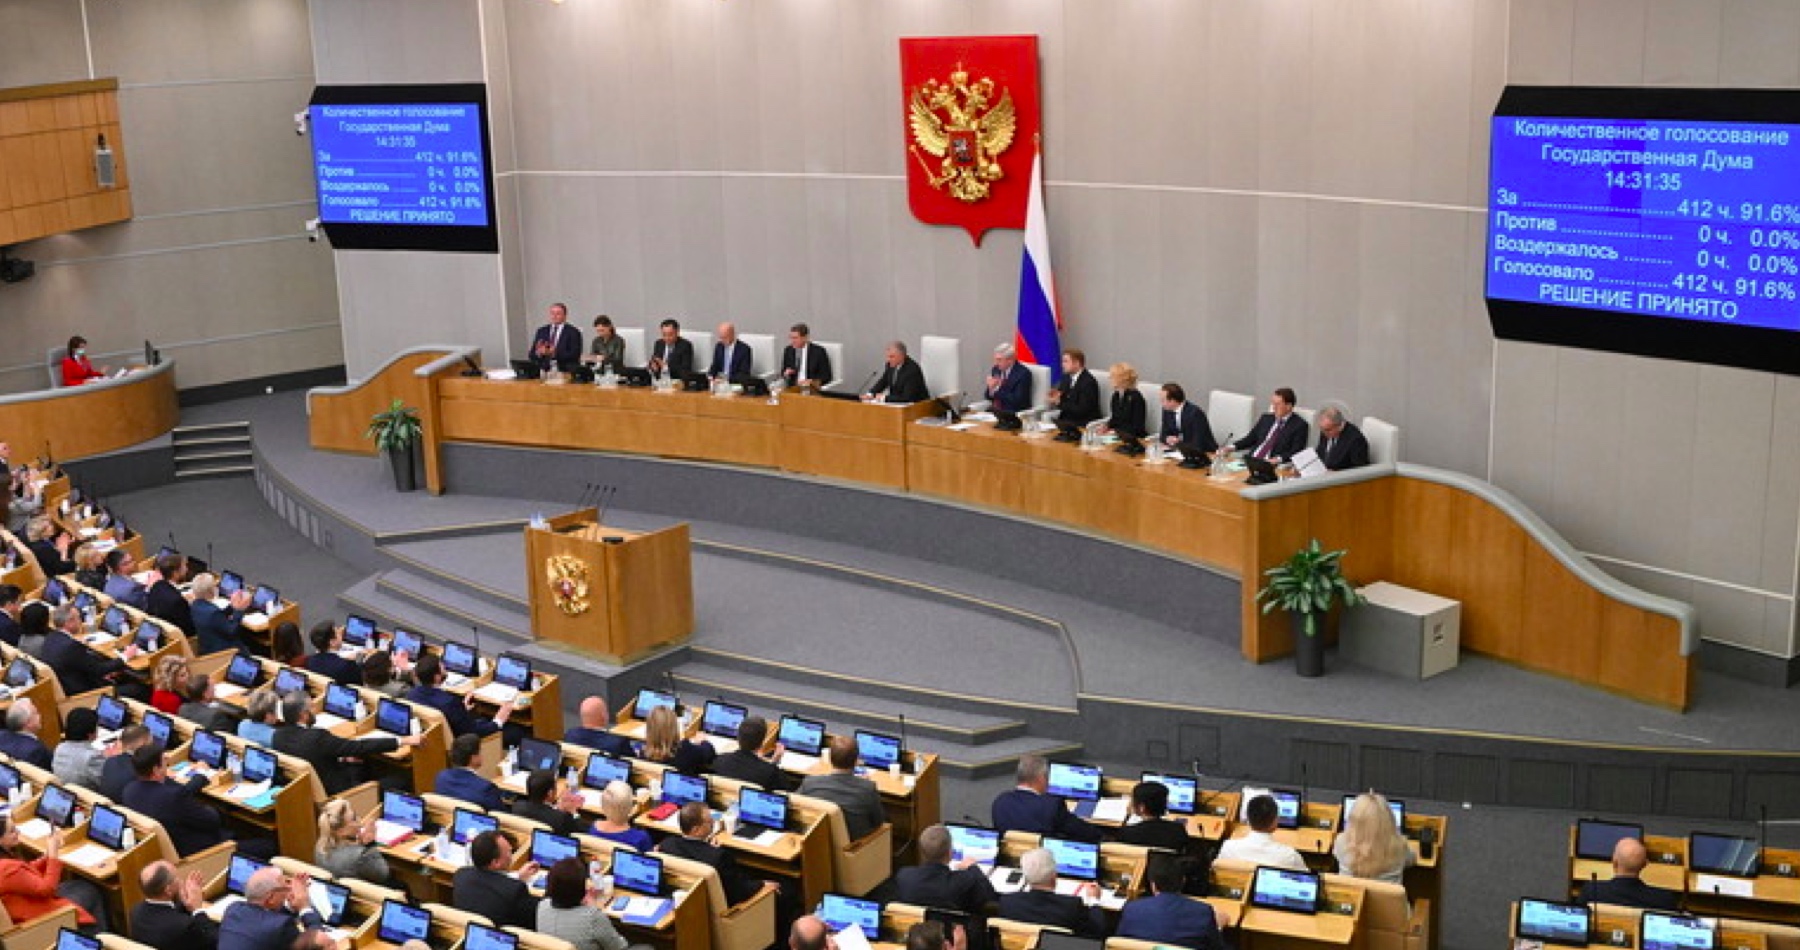 Ruská Štátna duma ratifikovala zmluvy o začlenení ukrajinských oblastí Doneck, Luhansk, Cherson a Záporožie do Ruskej federácie